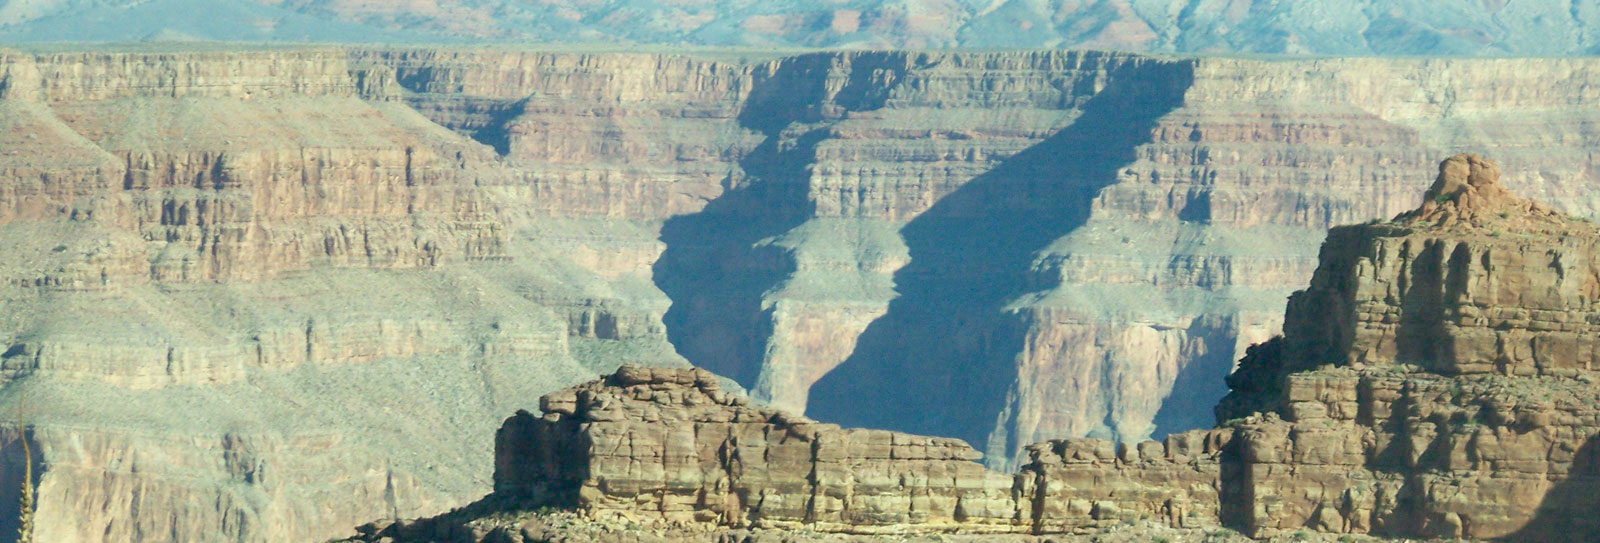 Photo of Grand Canyon - Taken by Bayats